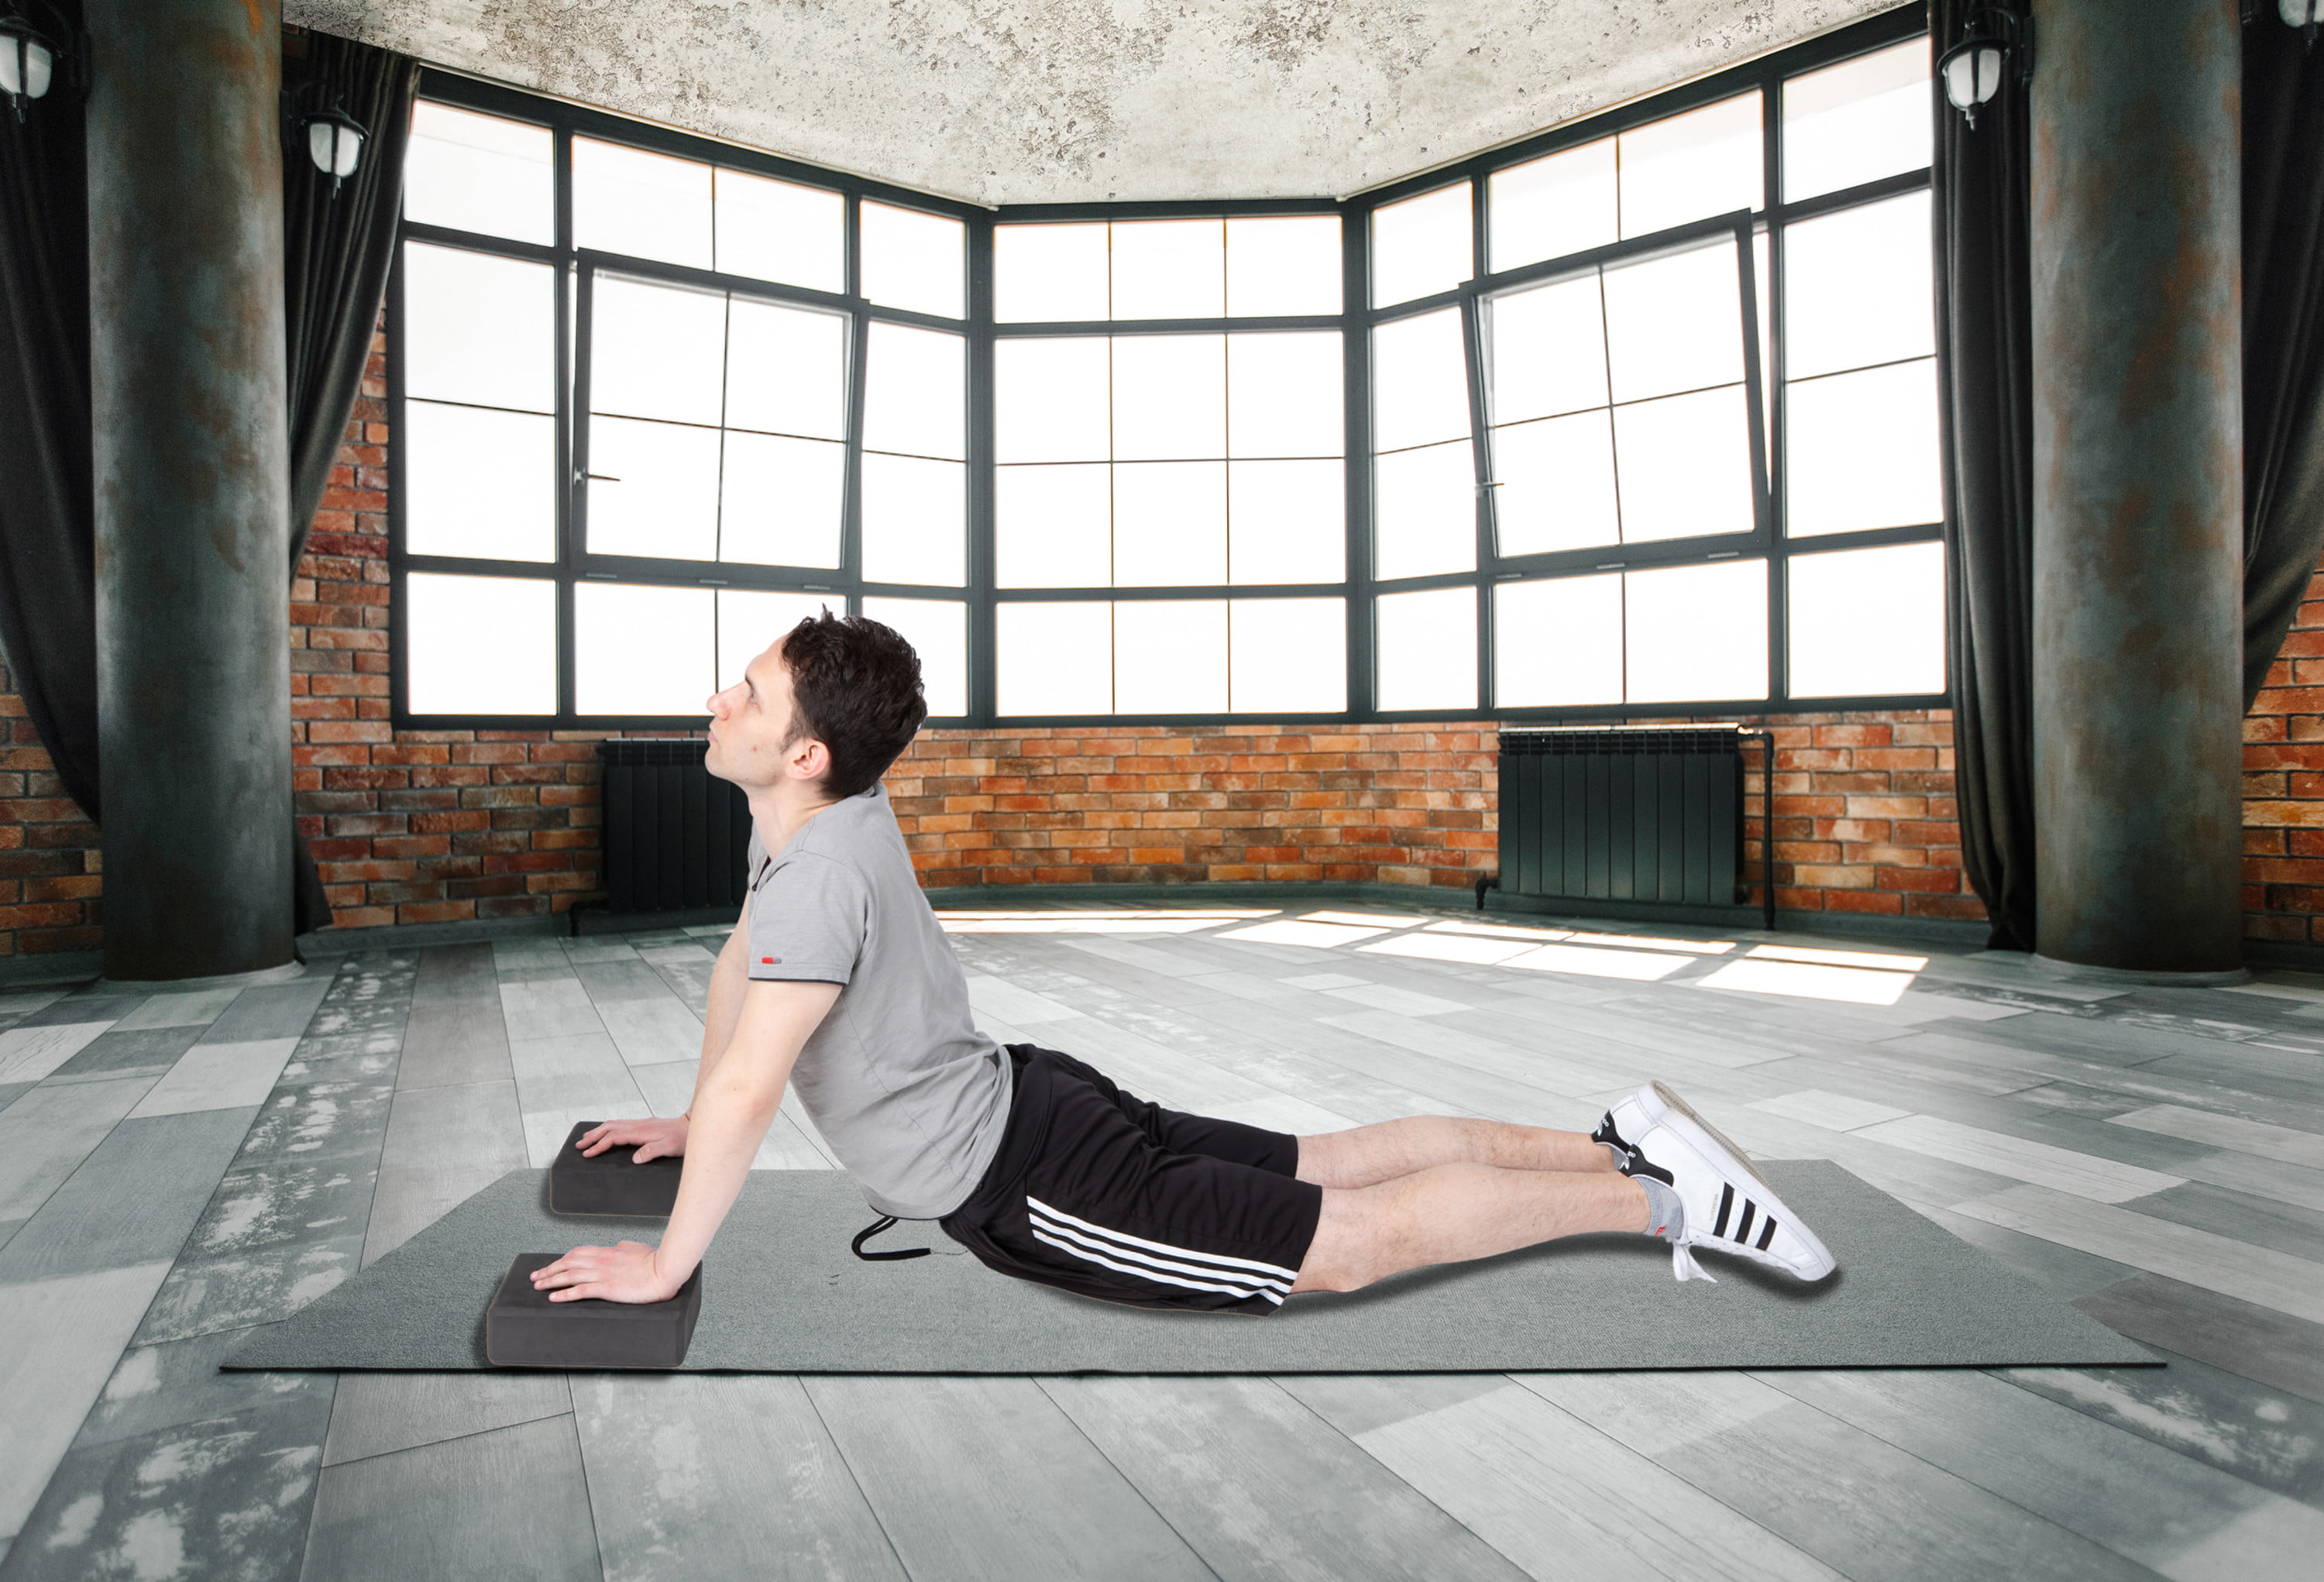 2 Packs WWWW Yoga Blocks Improve Strength and Aid Balance and Flexibility Meditation High Density EVA Foam Soft Non-Slip Supportive Surface for Yoga Pilates 